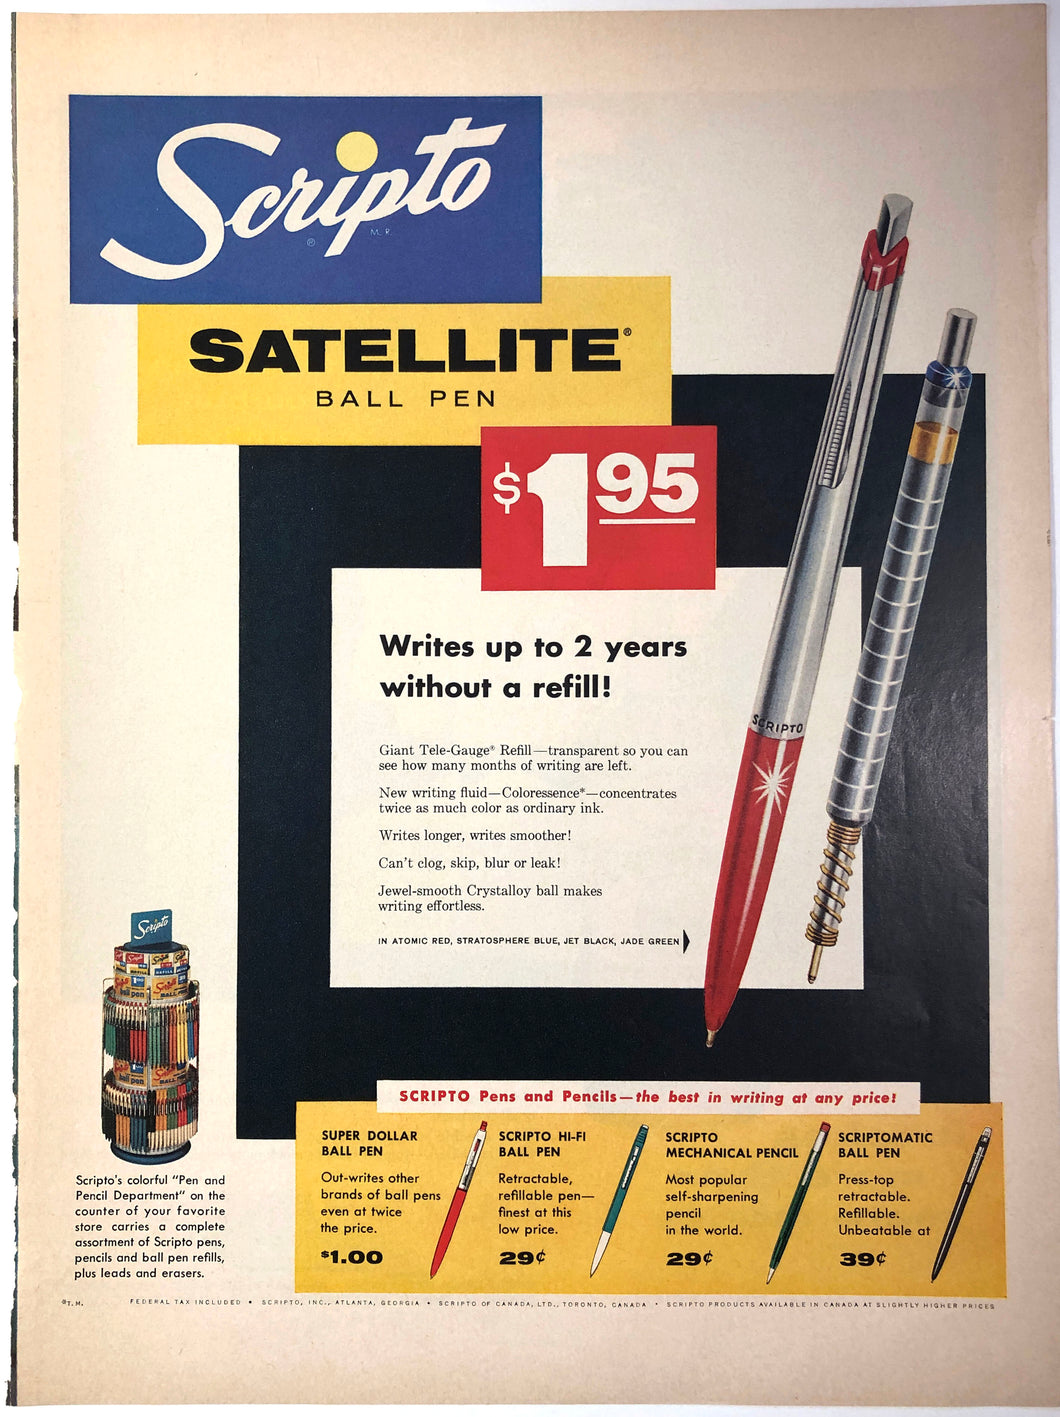 Scripto Satellite